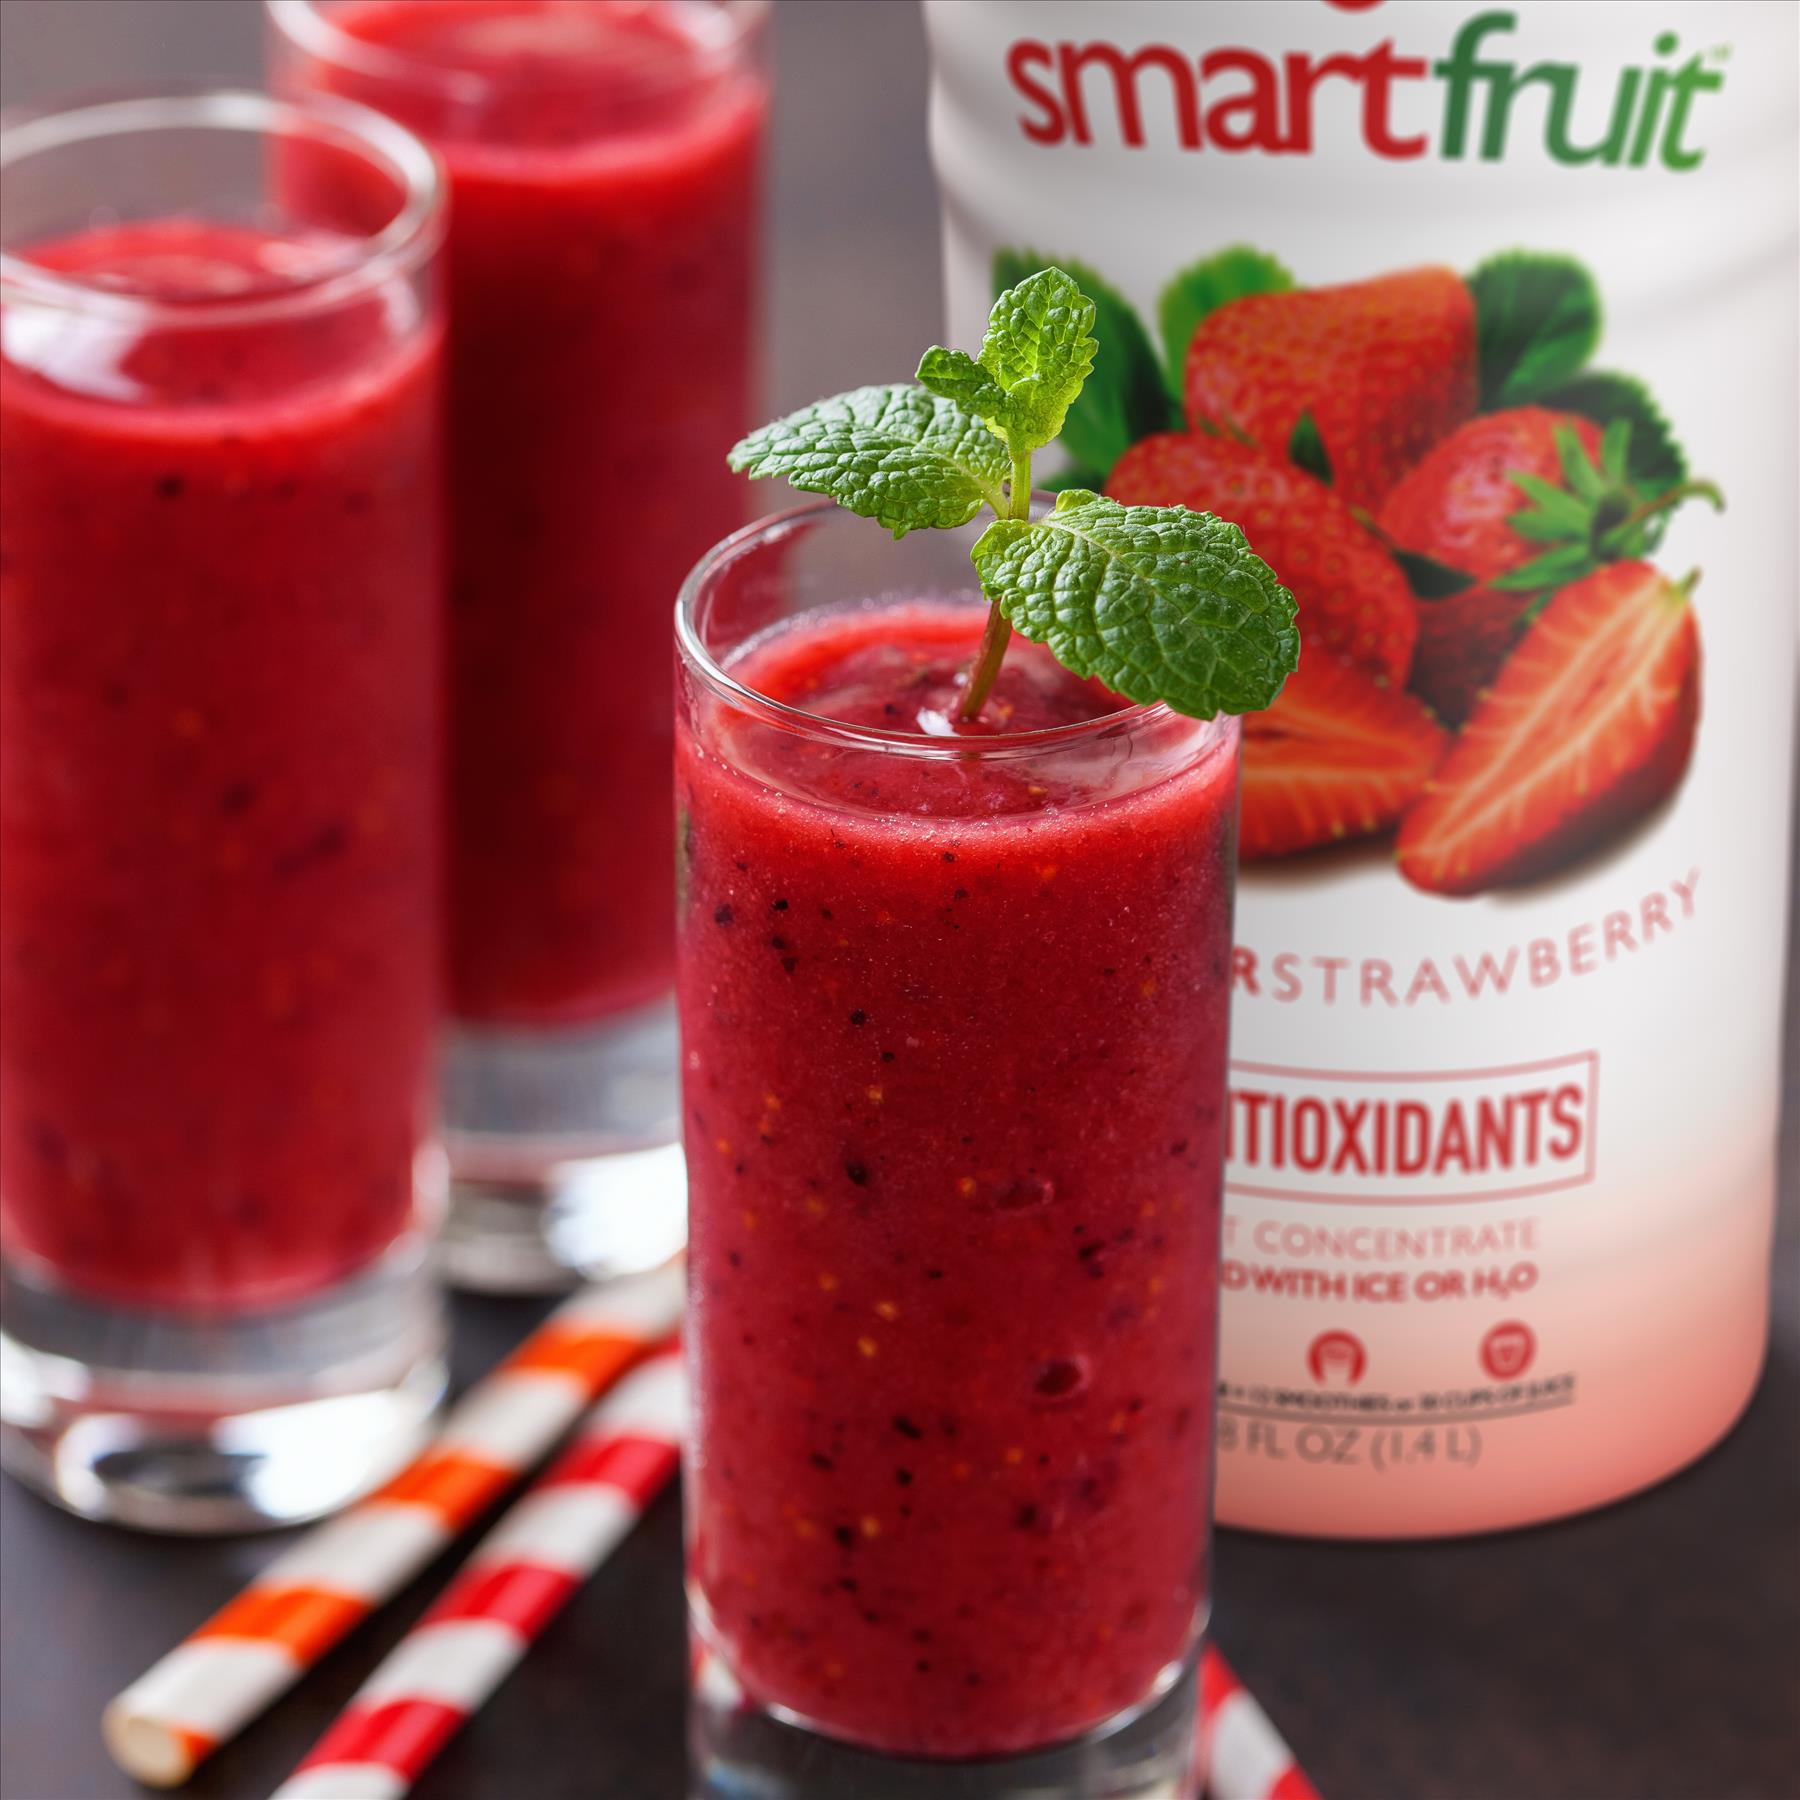 Strawberry Daiquiri Cocktail